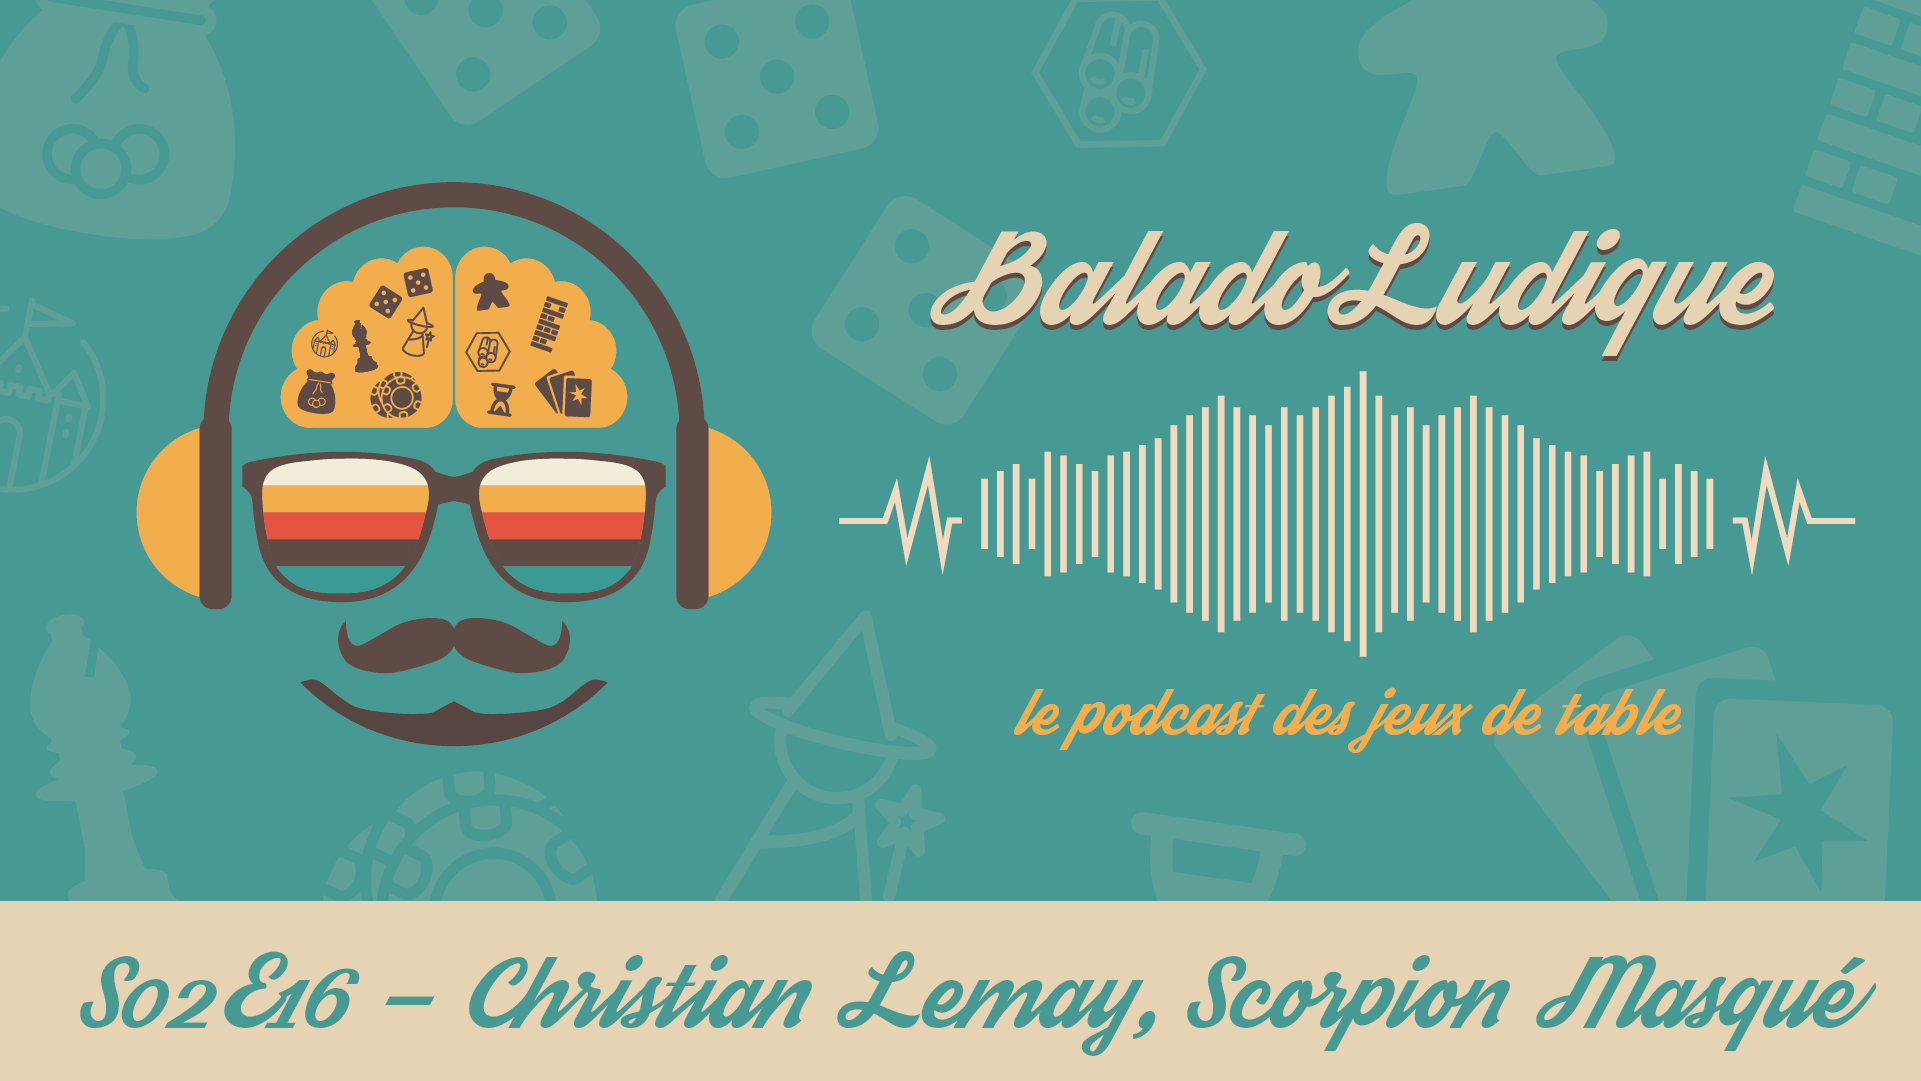 Christian Lemay, Scorpion Masqué - BaladoLudique - s02e16